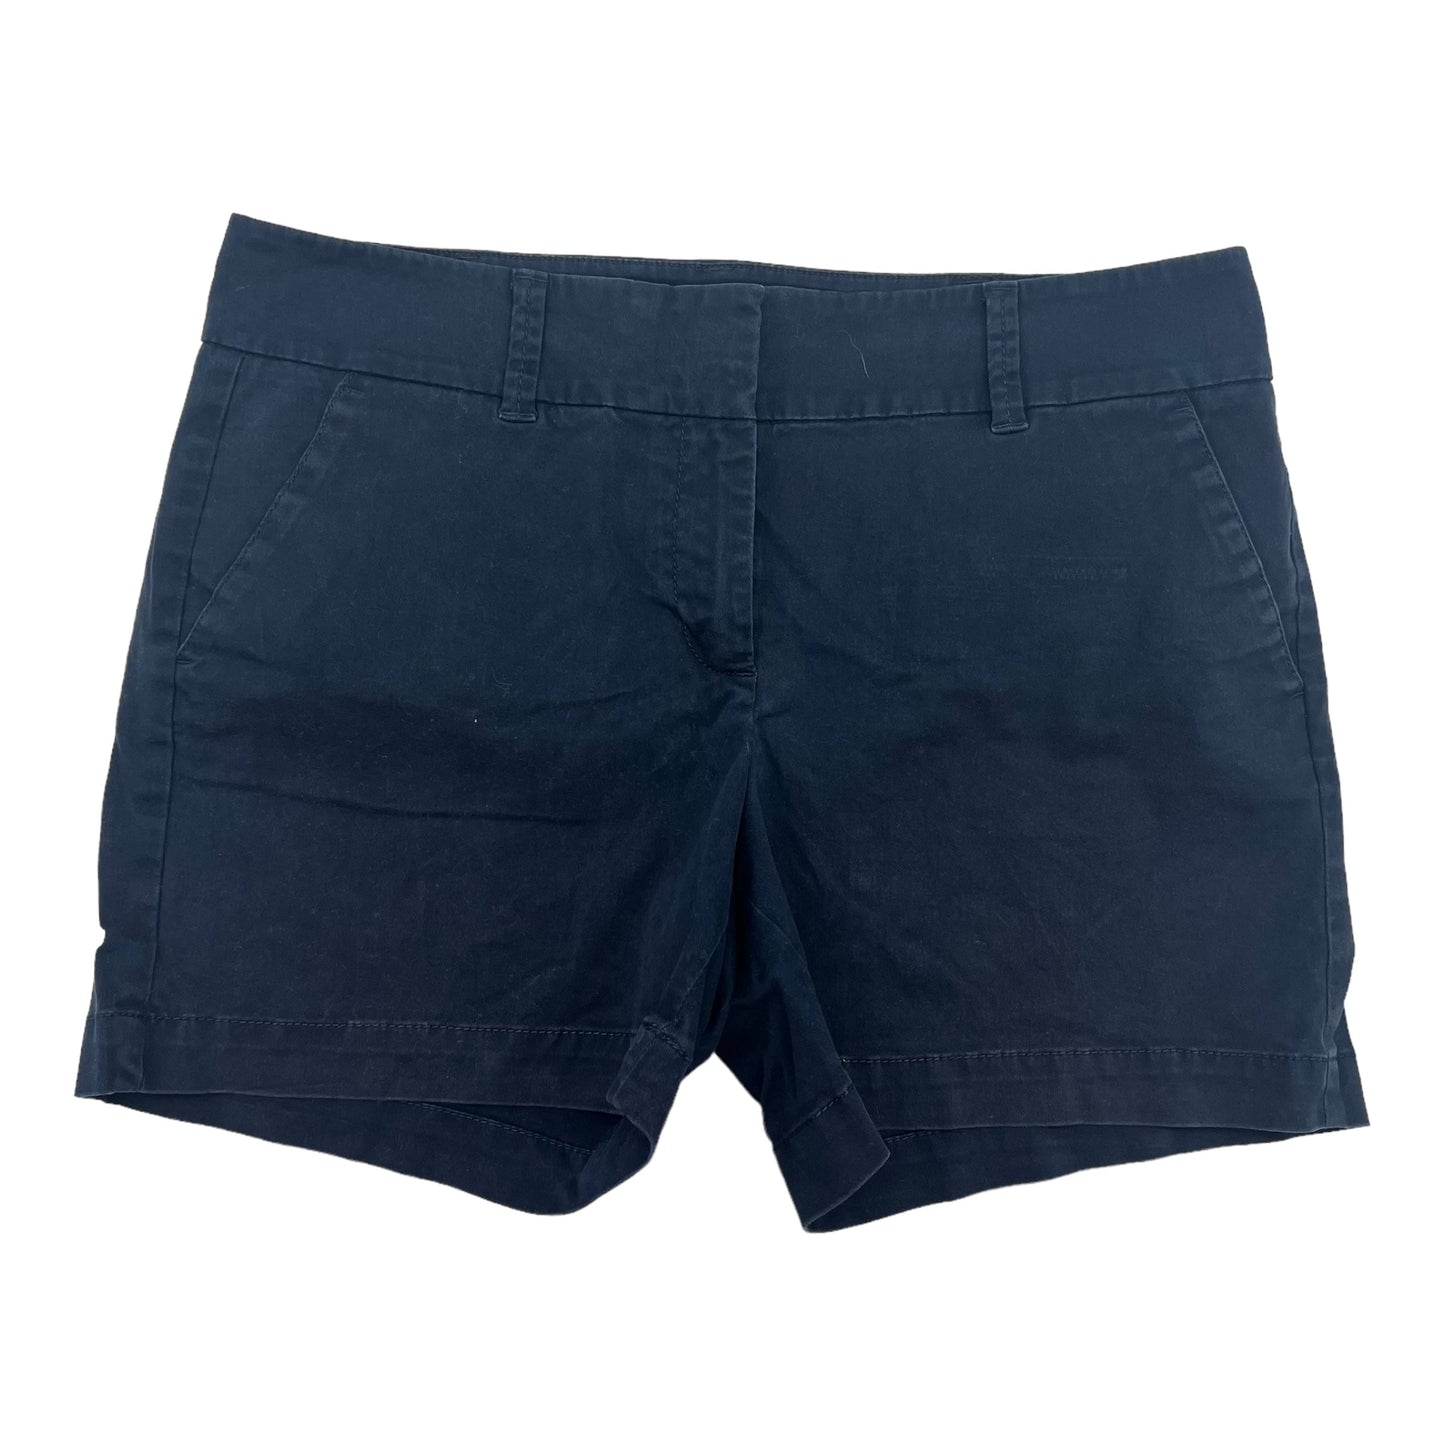 Shorts By Talbots  Size: 8